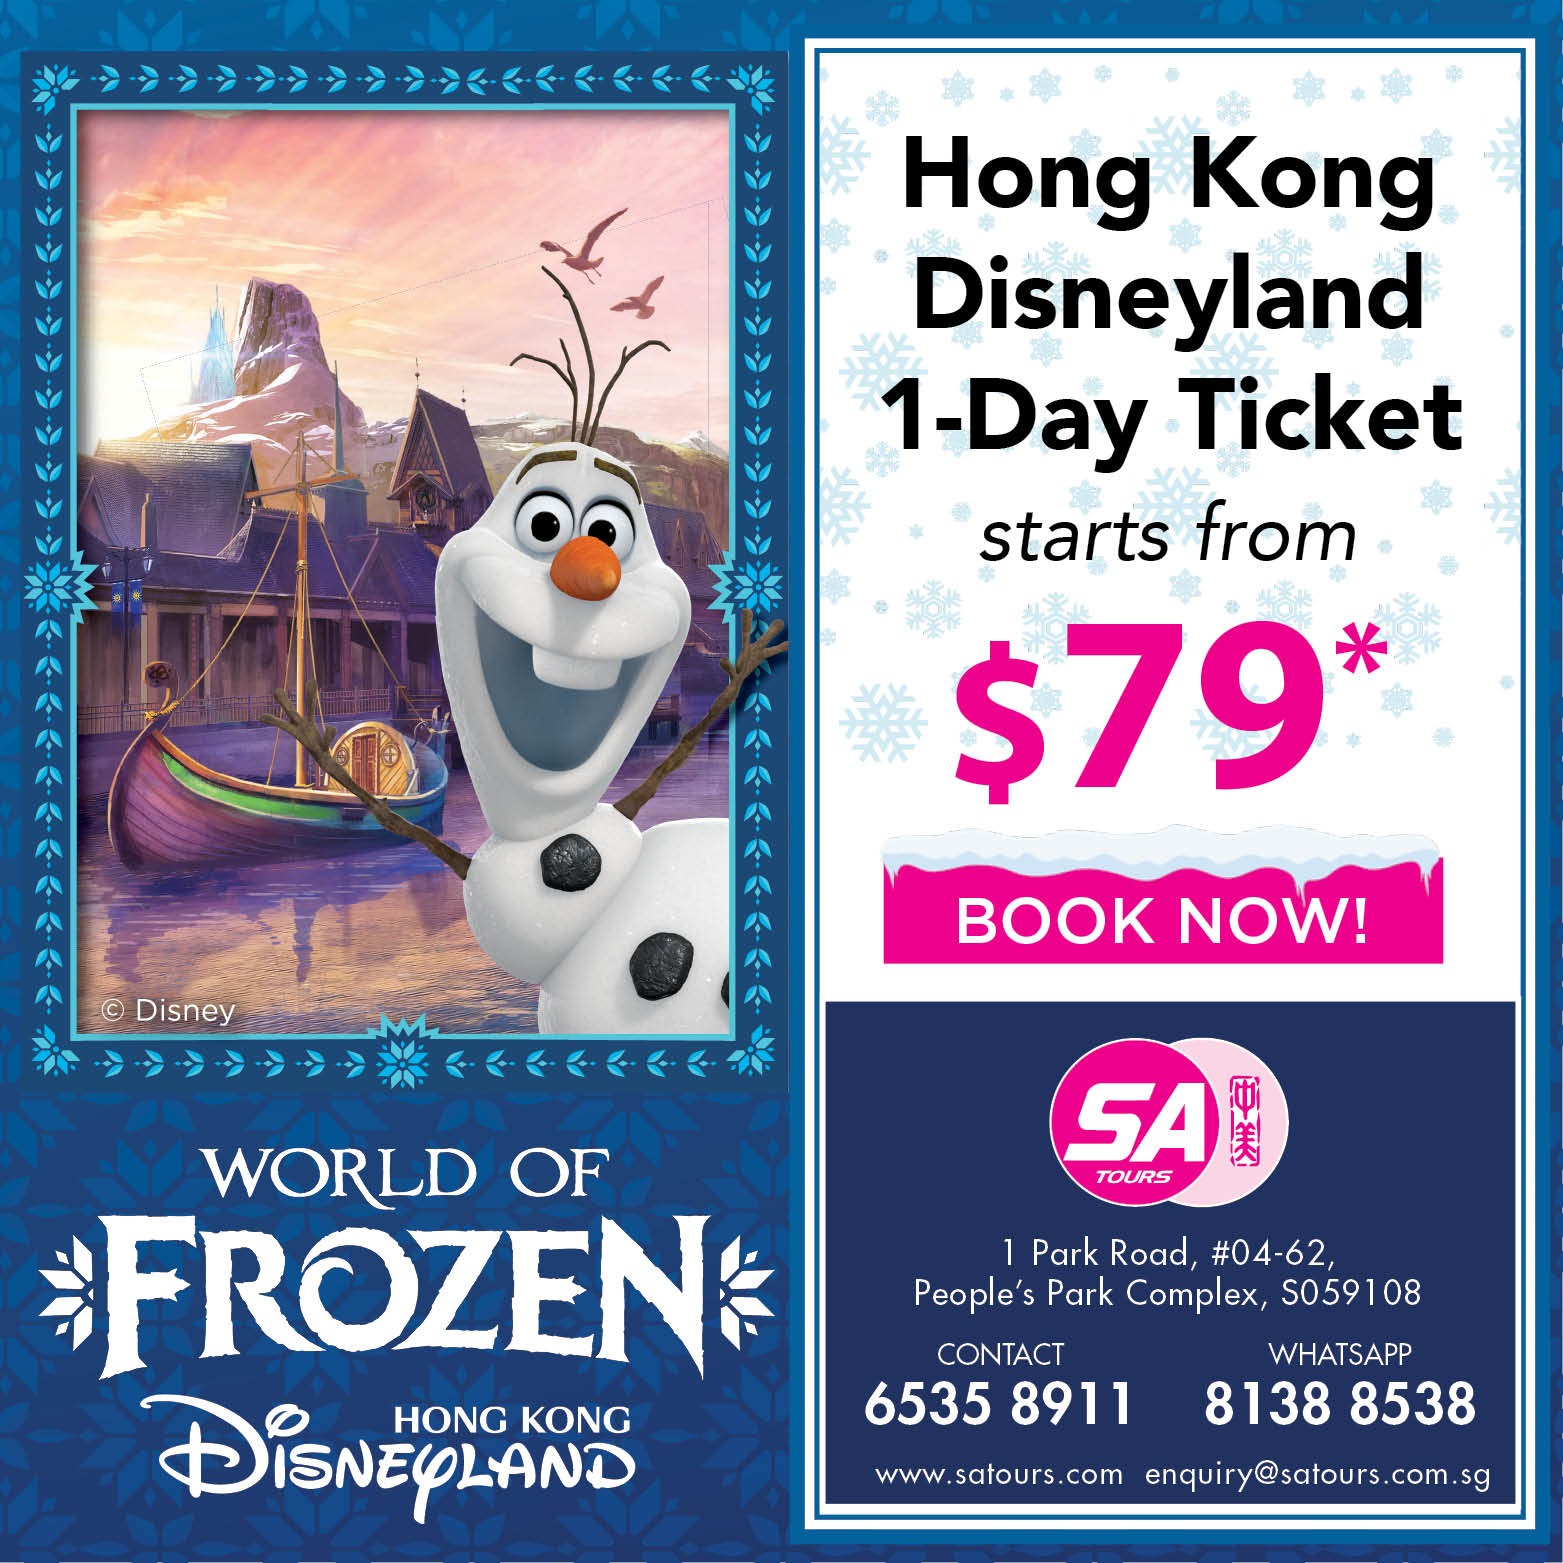 Hong Kong Disneyland 1-Day Ticket